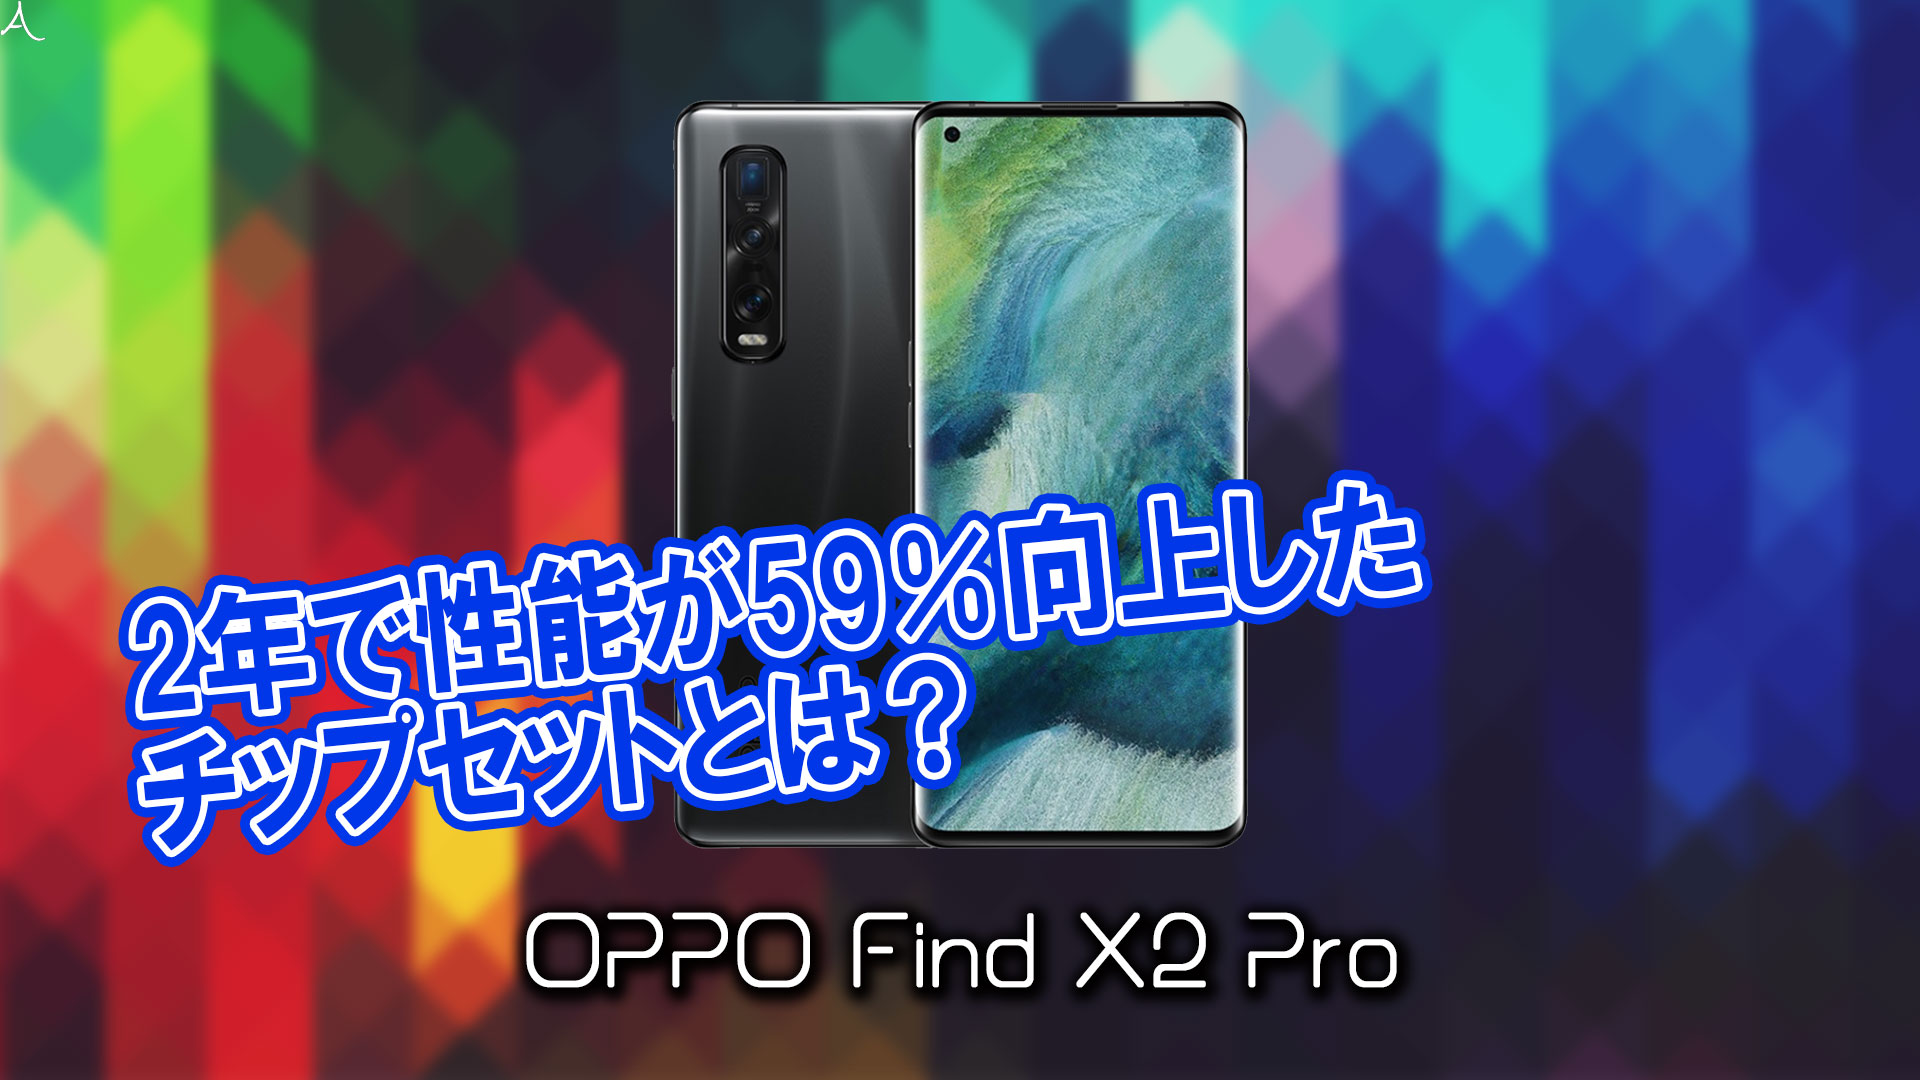 「OPPO Find X2 Pro」のチップセット（CPU）は何？性能をベンチマーク(Geekbench)で比較